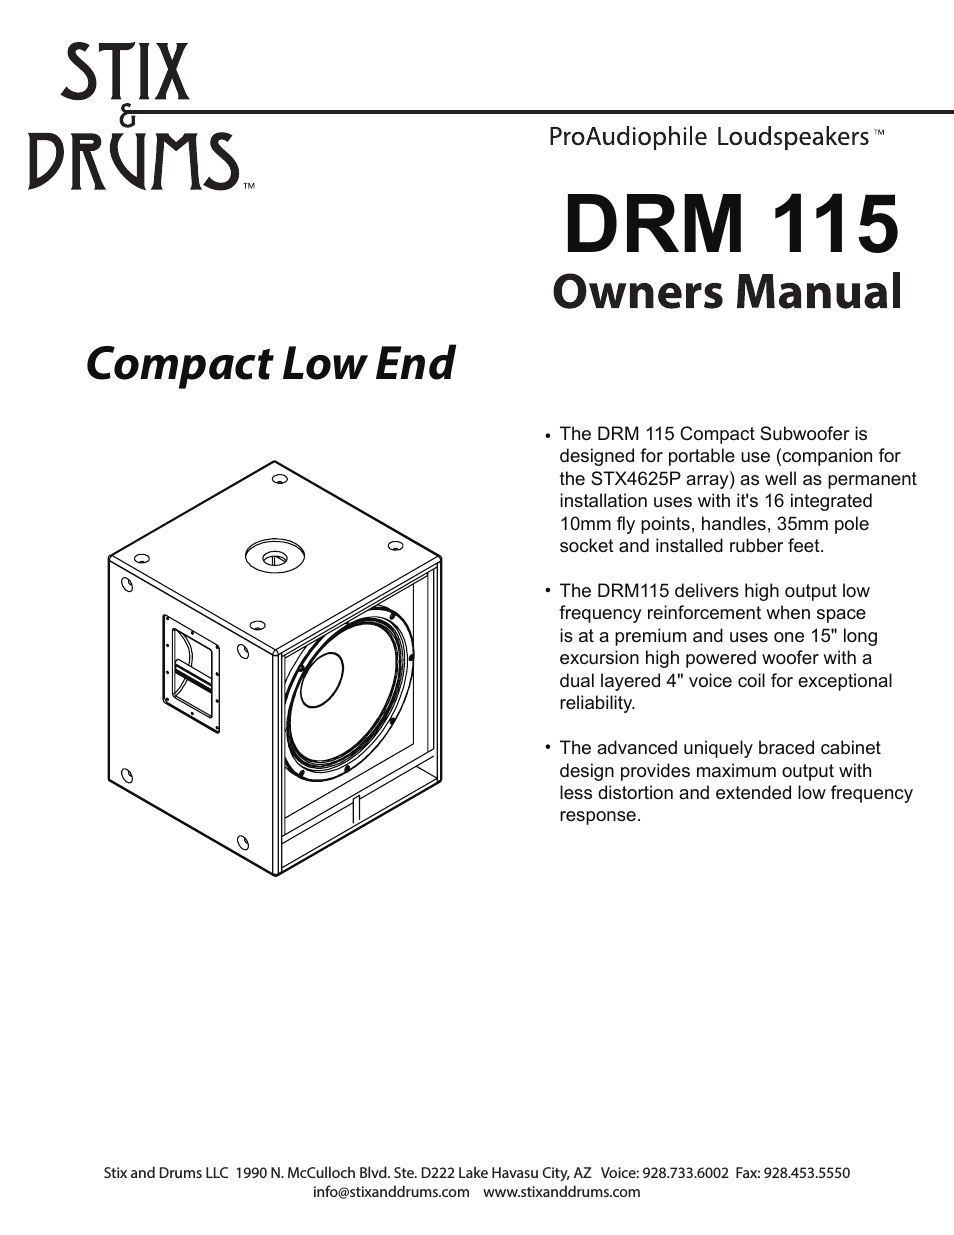 DRM 118